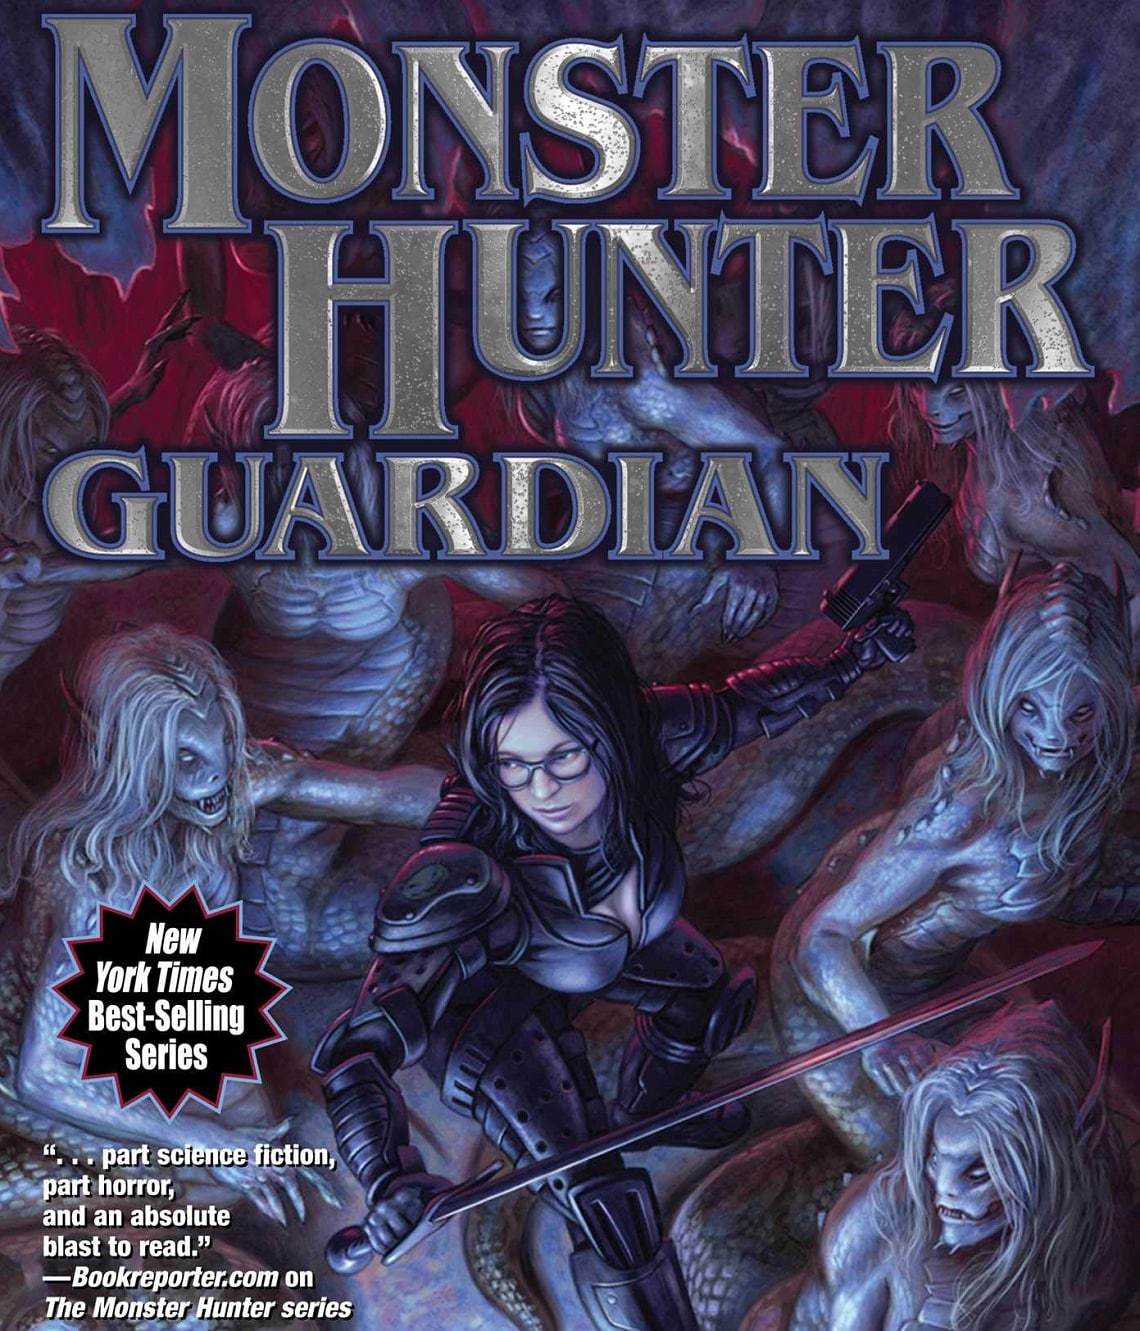 Monster Hunter Guardian Audiobook free download